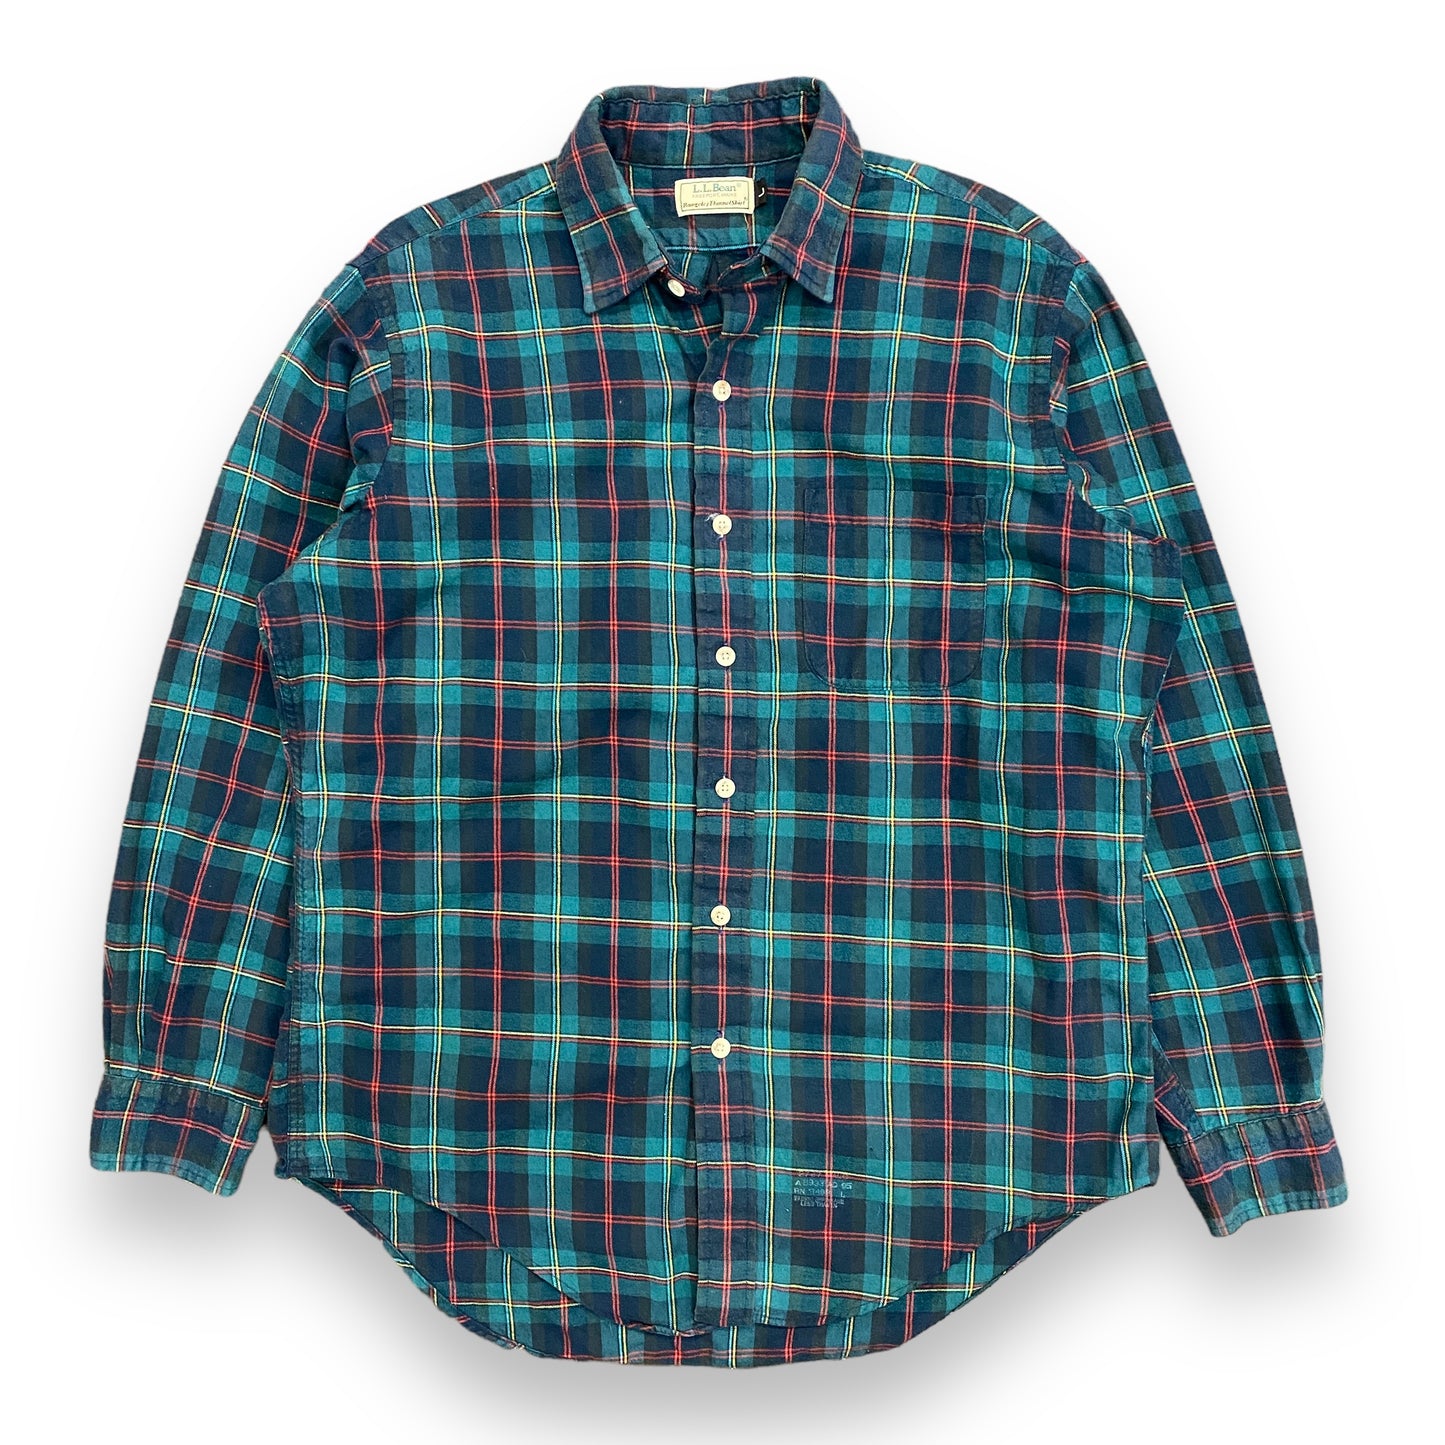 90s LL Bean "Rangeley Flannel Shirt" - Size Large